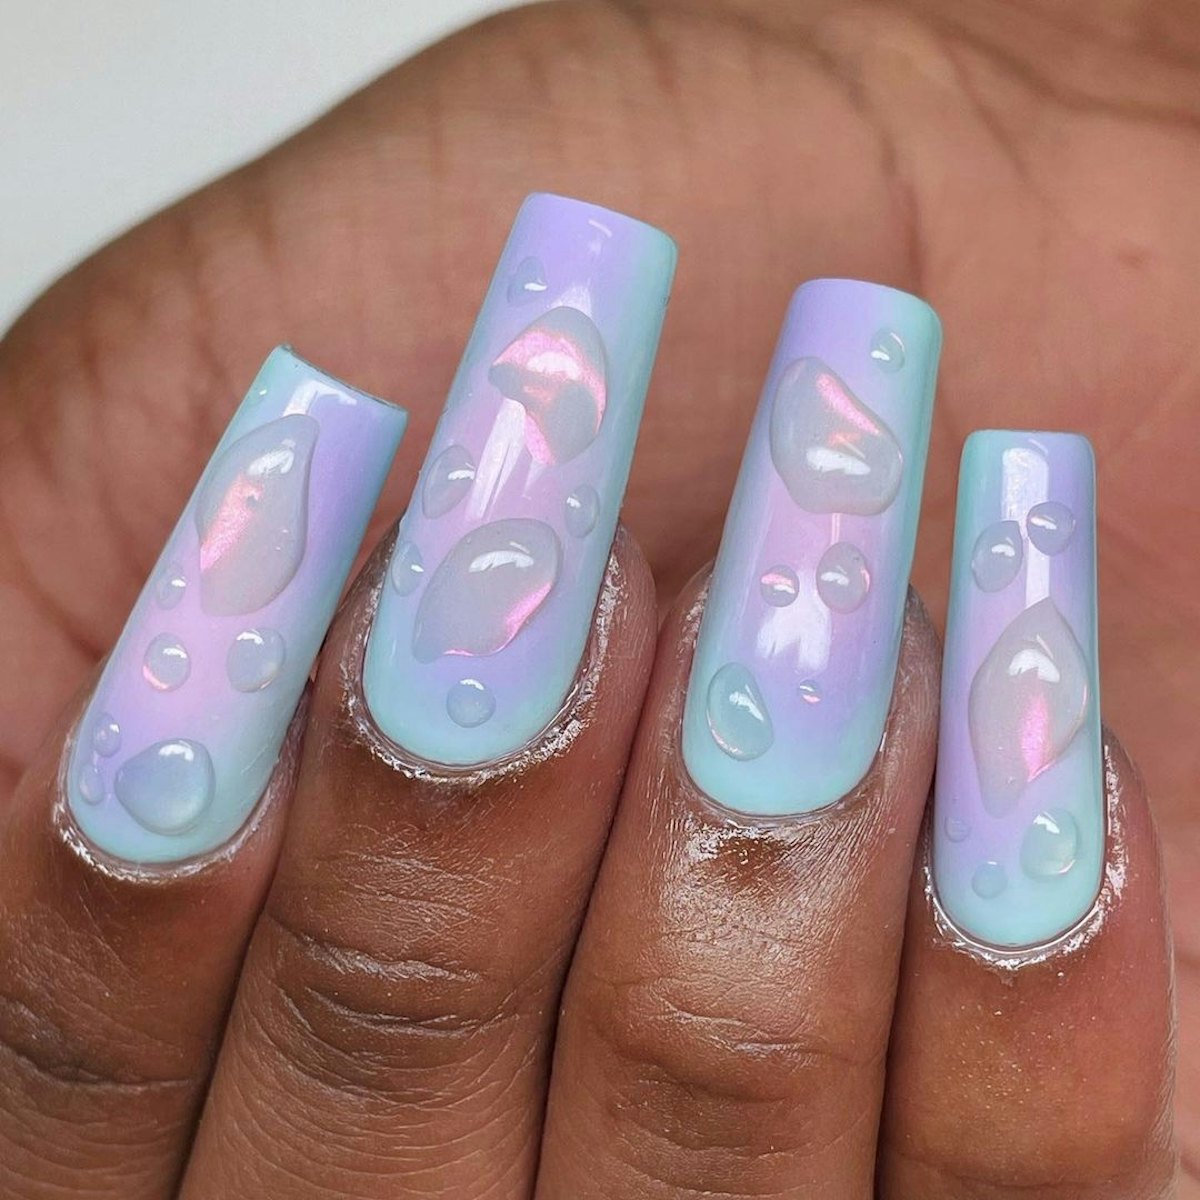  Try mermaid-inspired iridescent nail art for Pisces season.